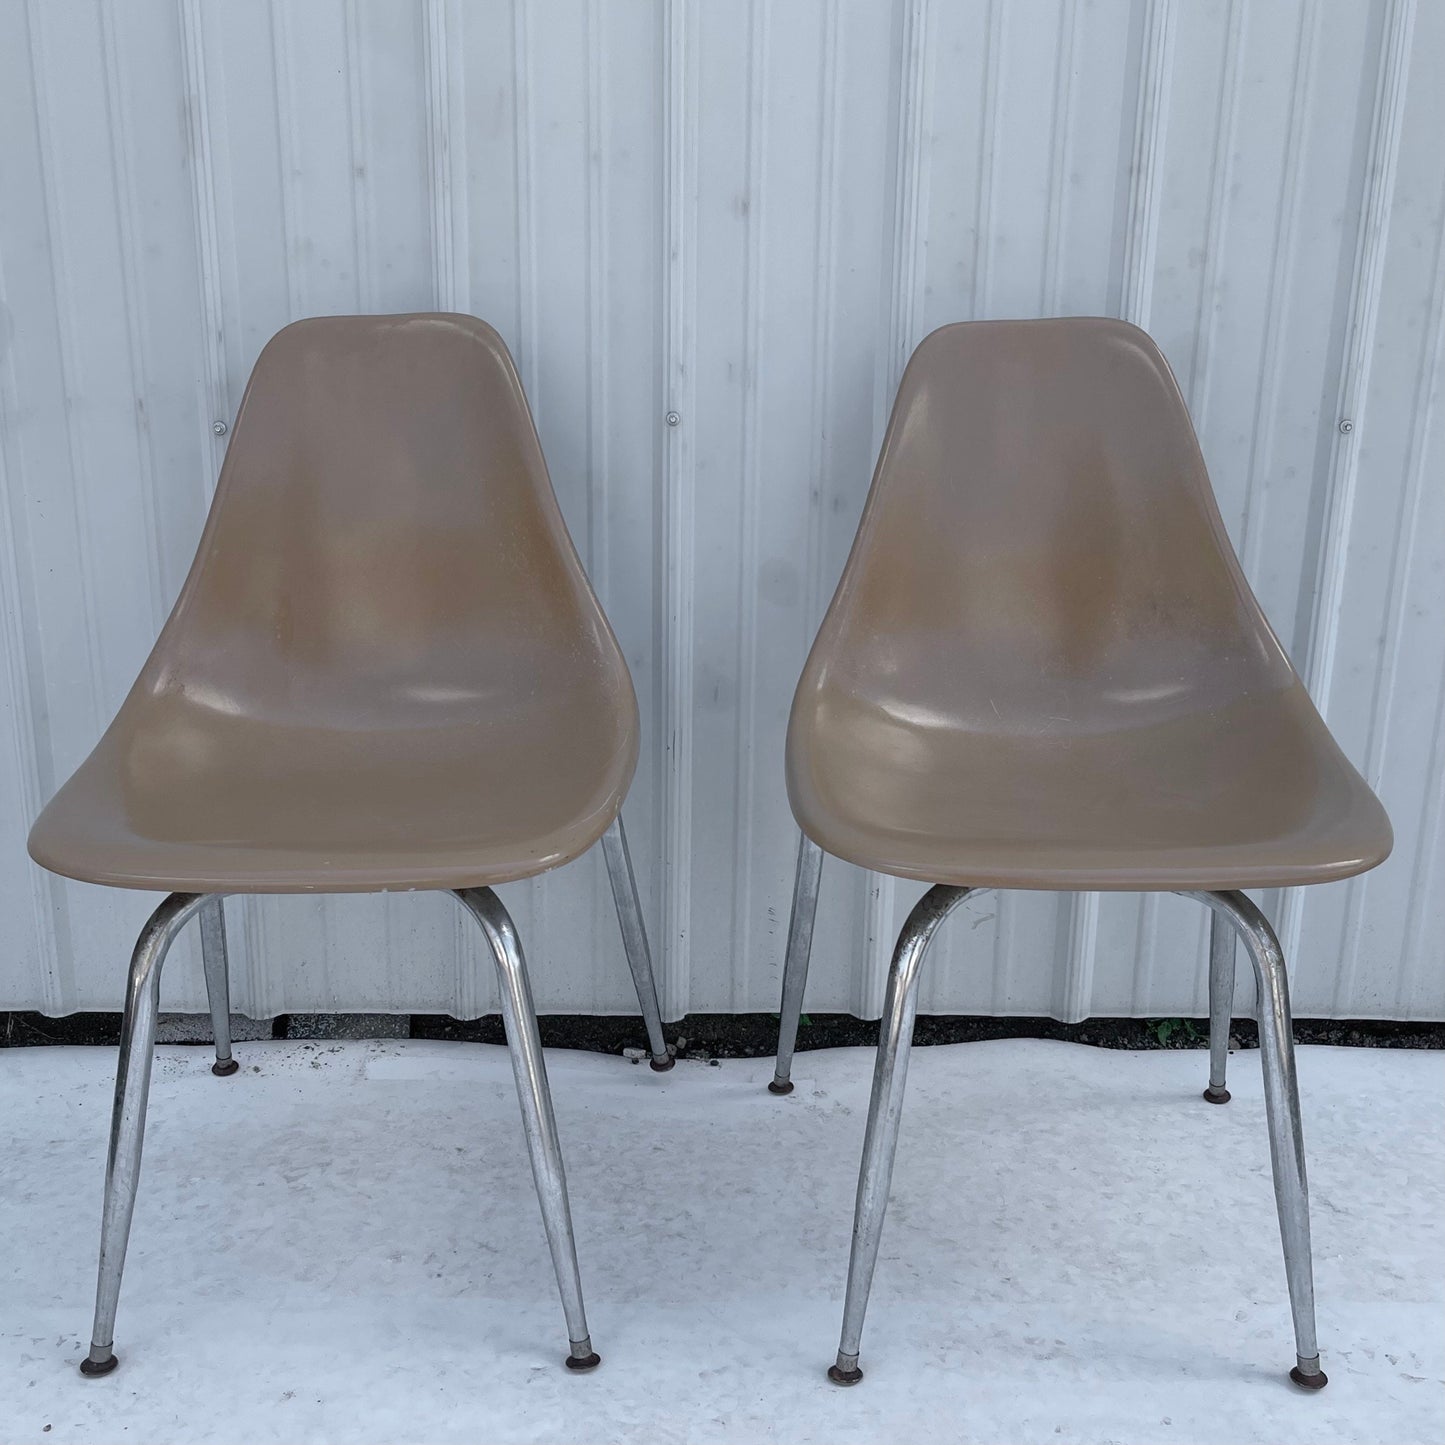 Pair Mid-Century Modern Shell Chairs